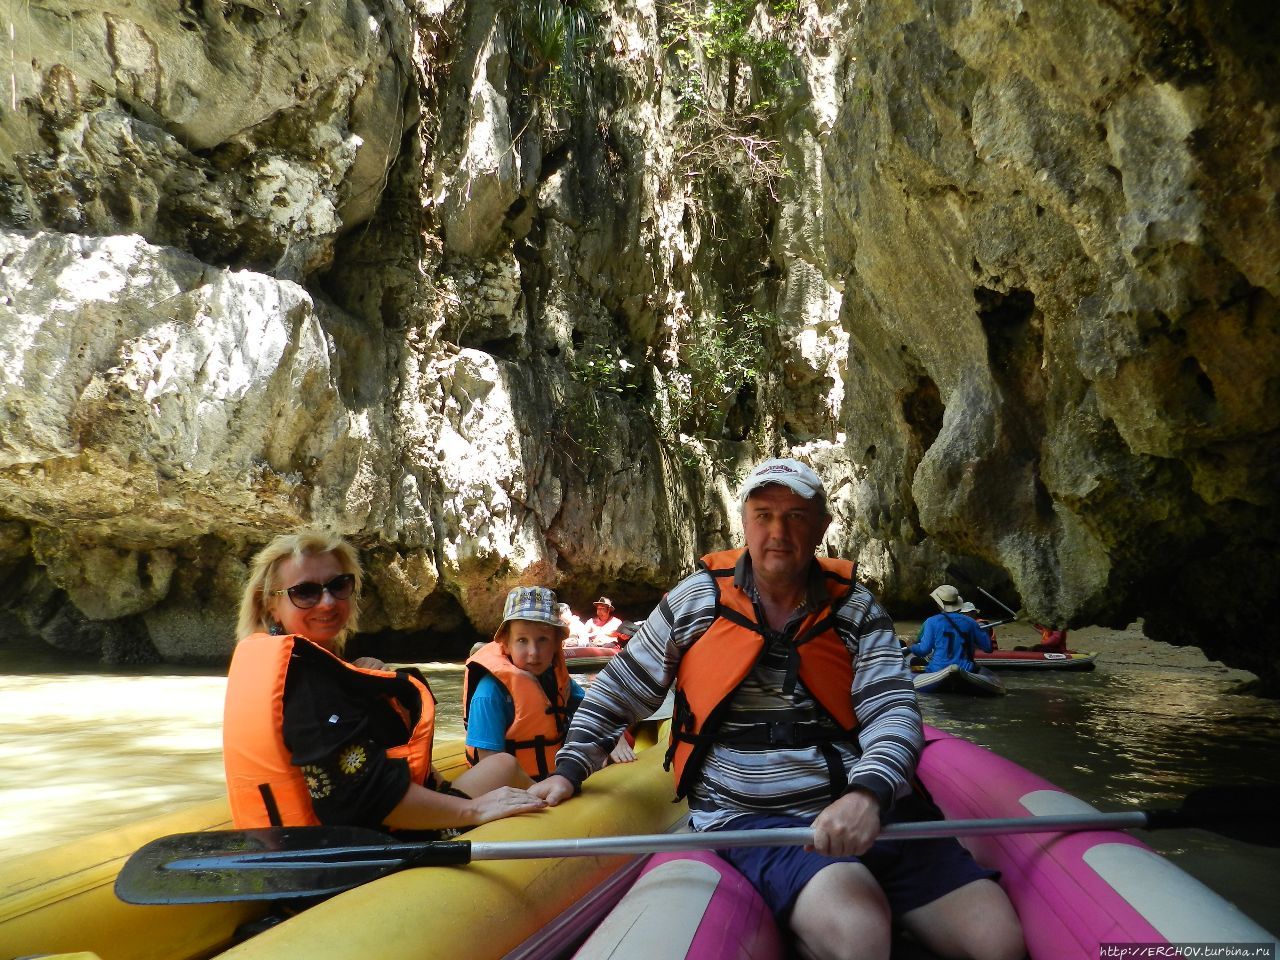 Экскурсия по островам. Ч — 2. Катание на каноэ Пханг-Нга, Таиланд